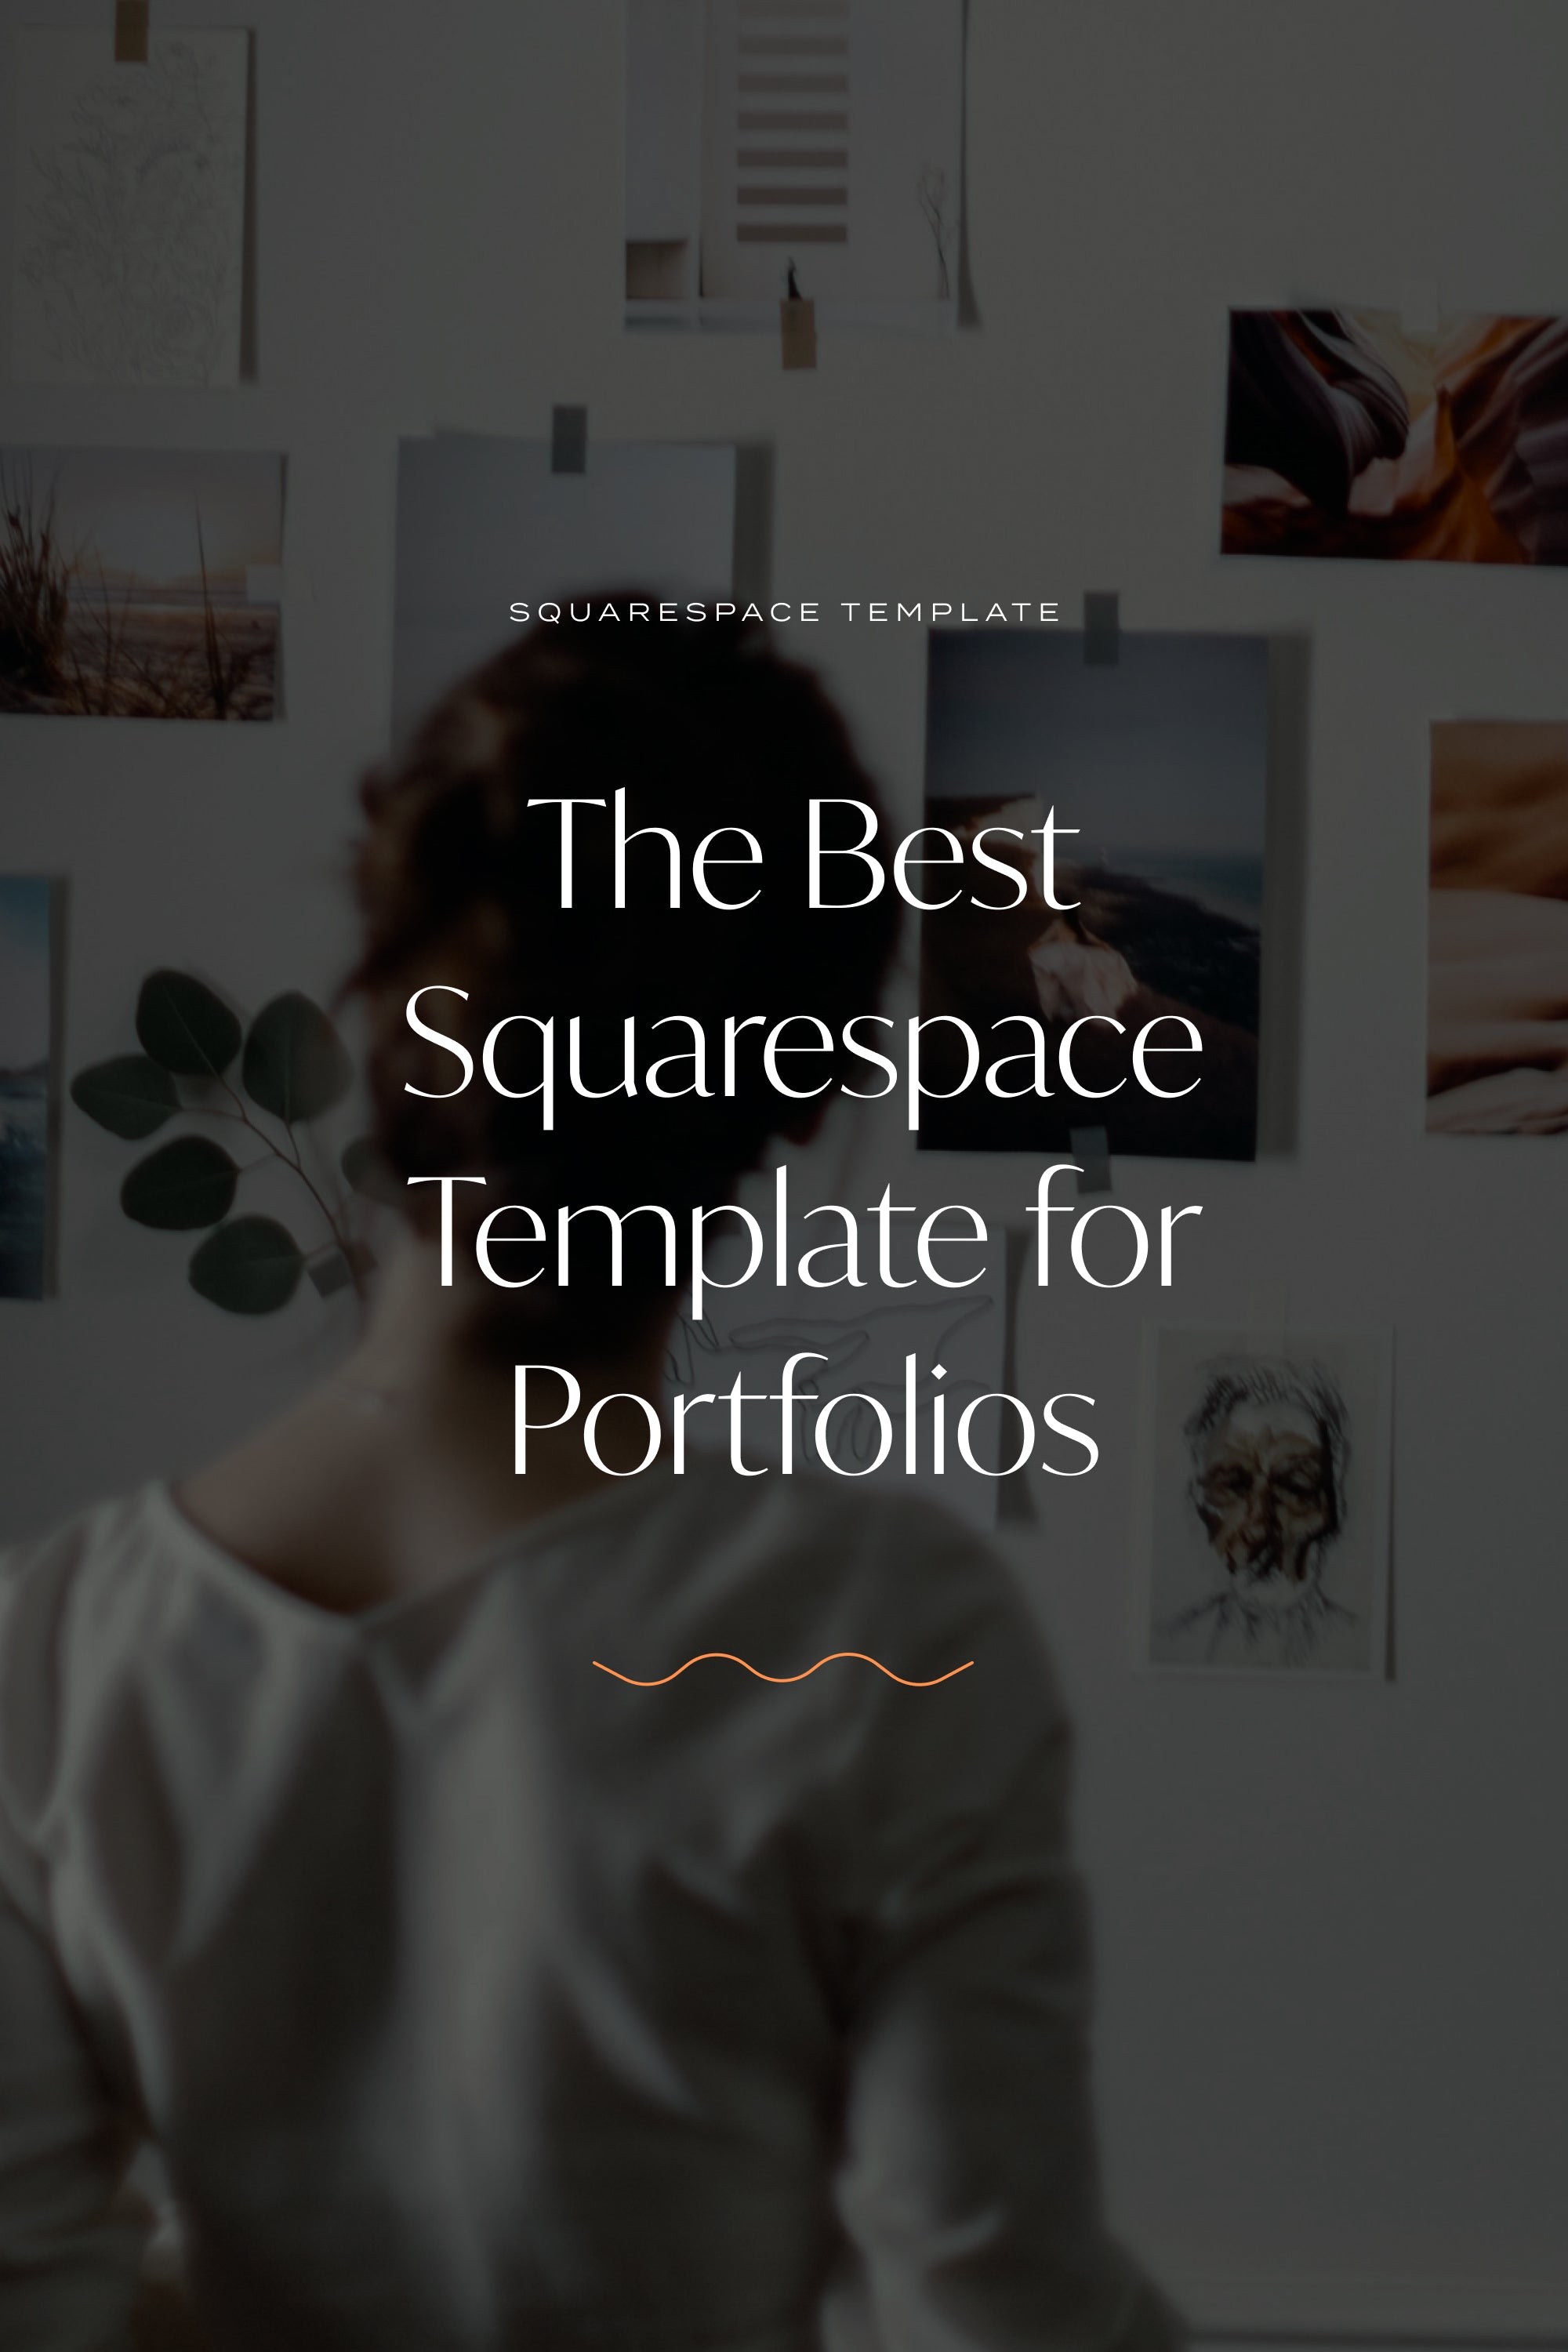 Folio - The Best Squarespace Template for Portfolios